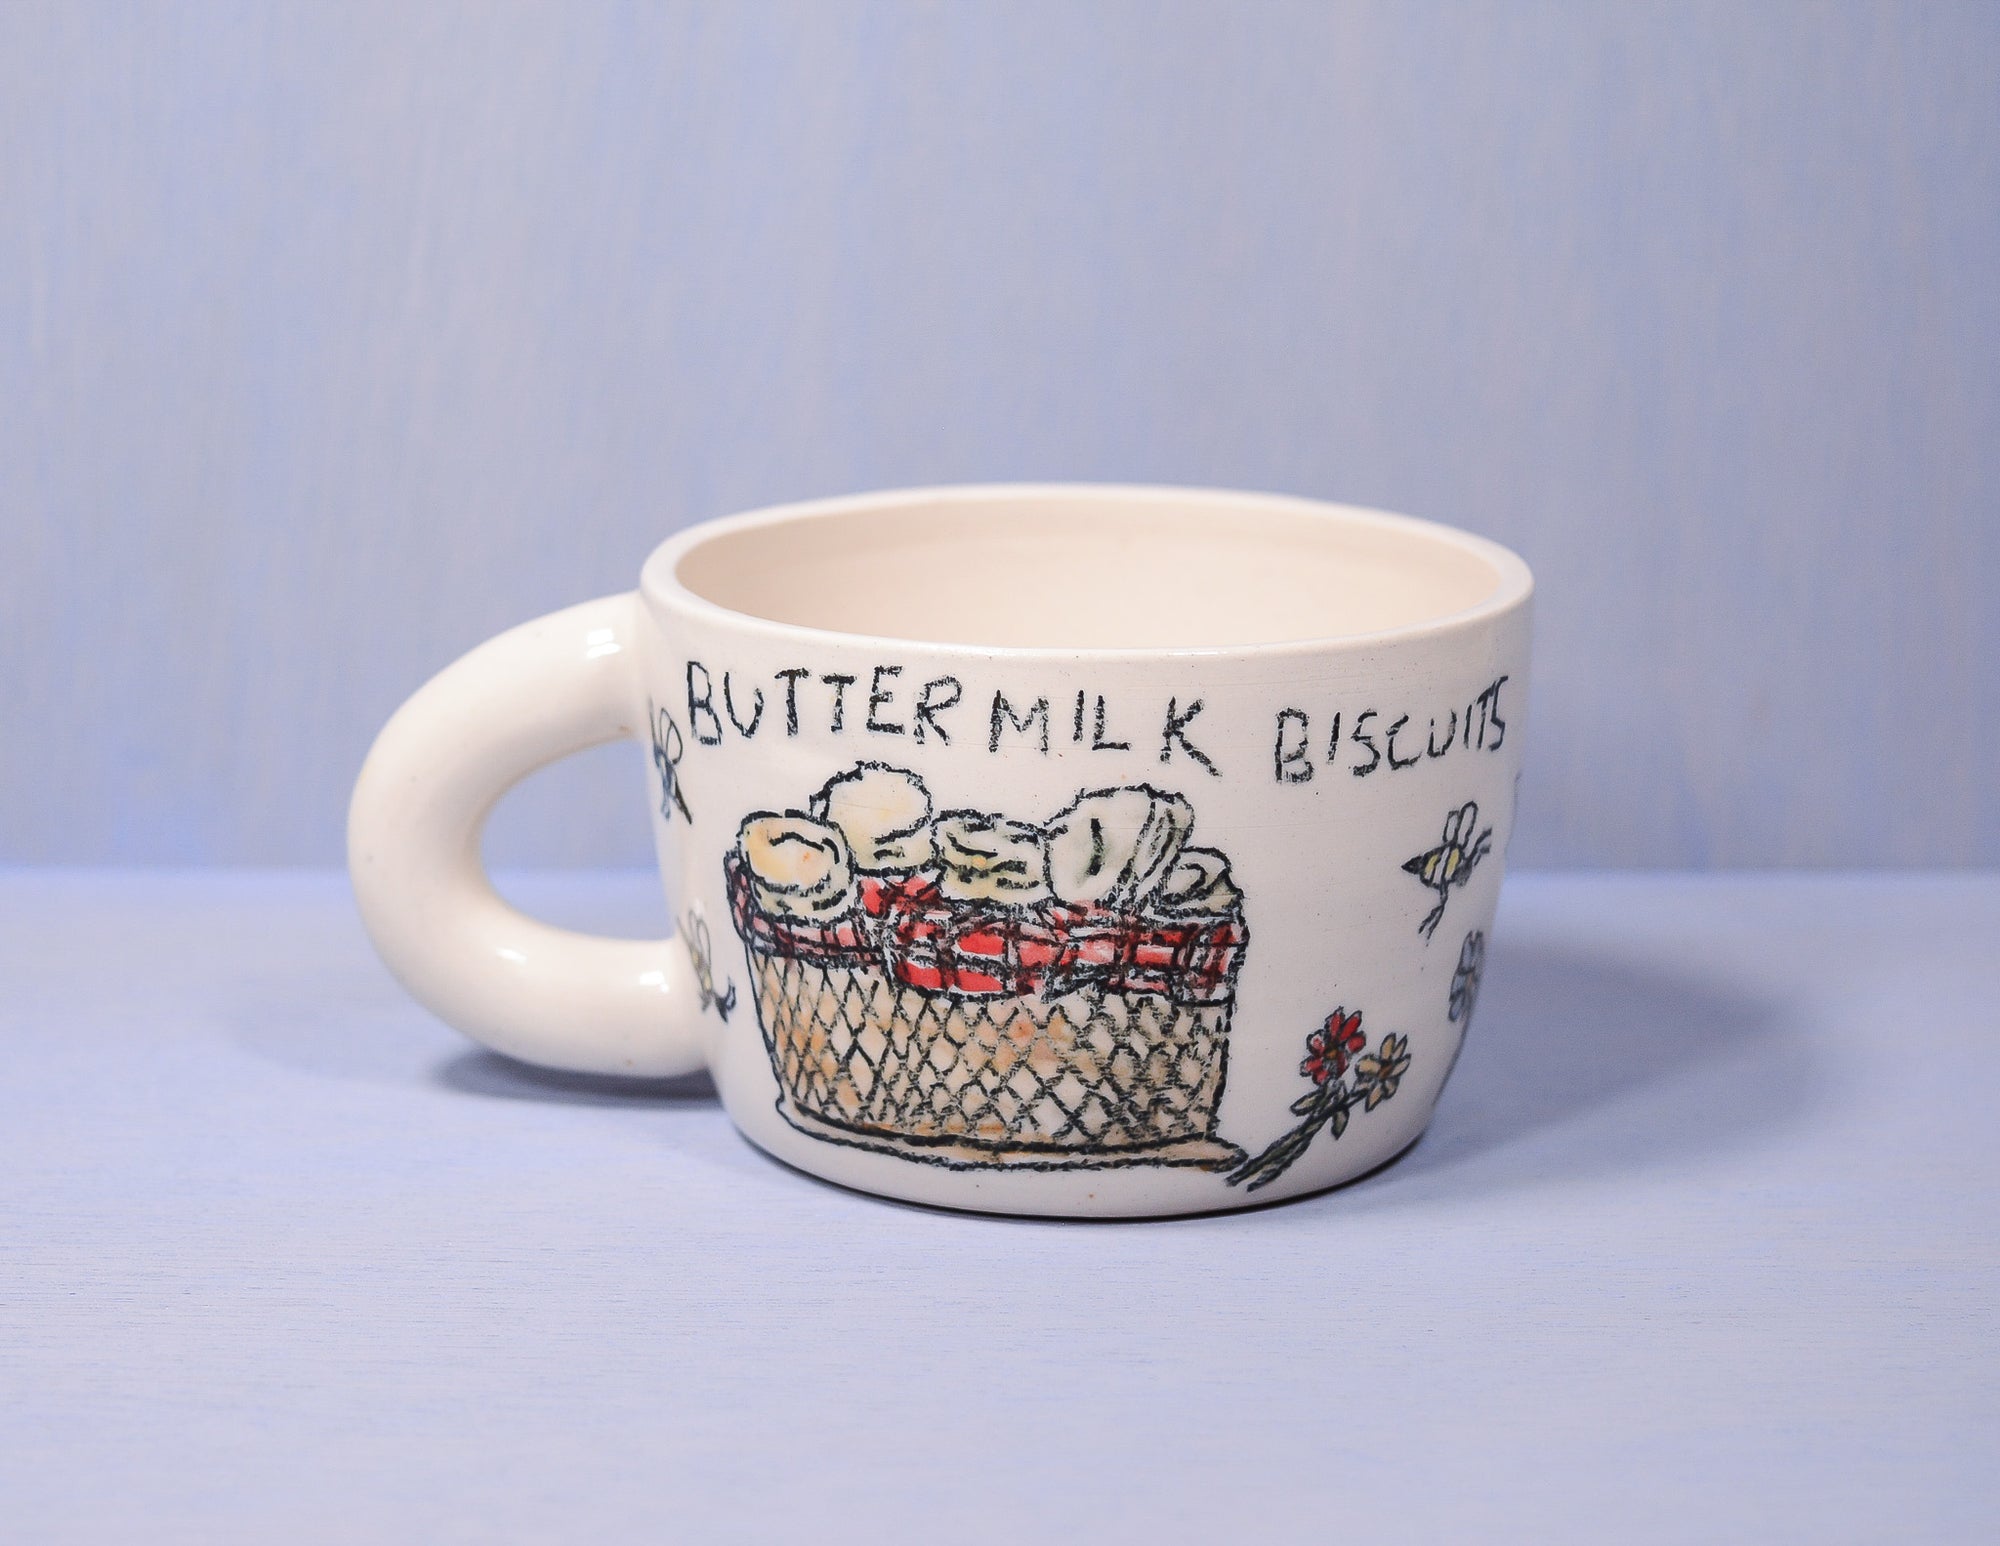 Buttermilk Biscuits Mug